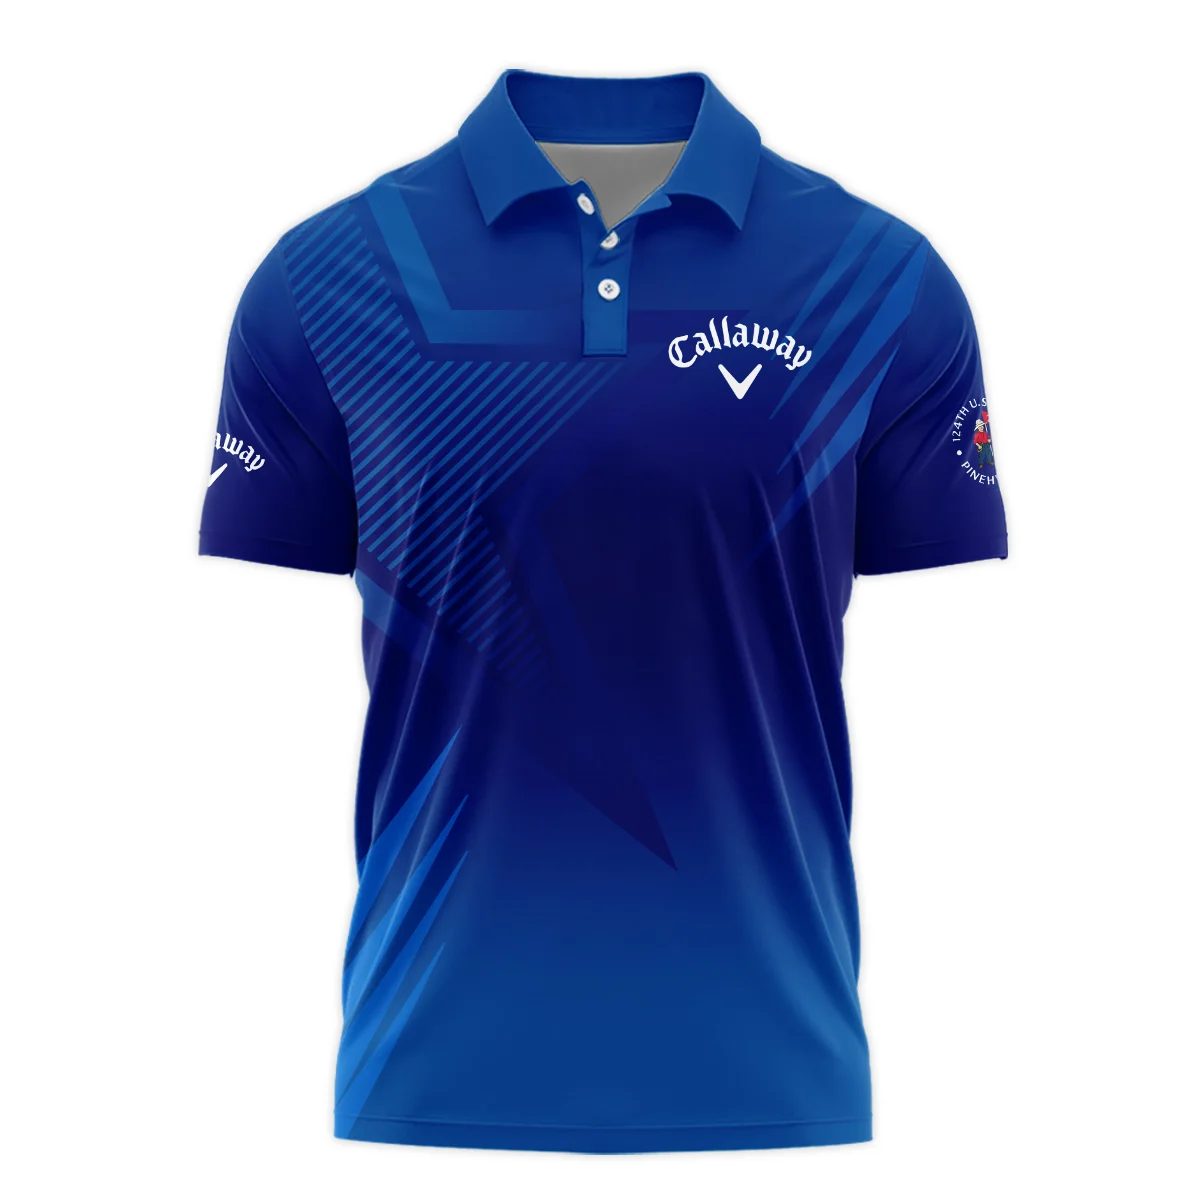 124th U.S. Open Pinehurst No.2 Callaway Polo Shirt Dark Blue Gradient Star Pattern Polo Shirt For Men